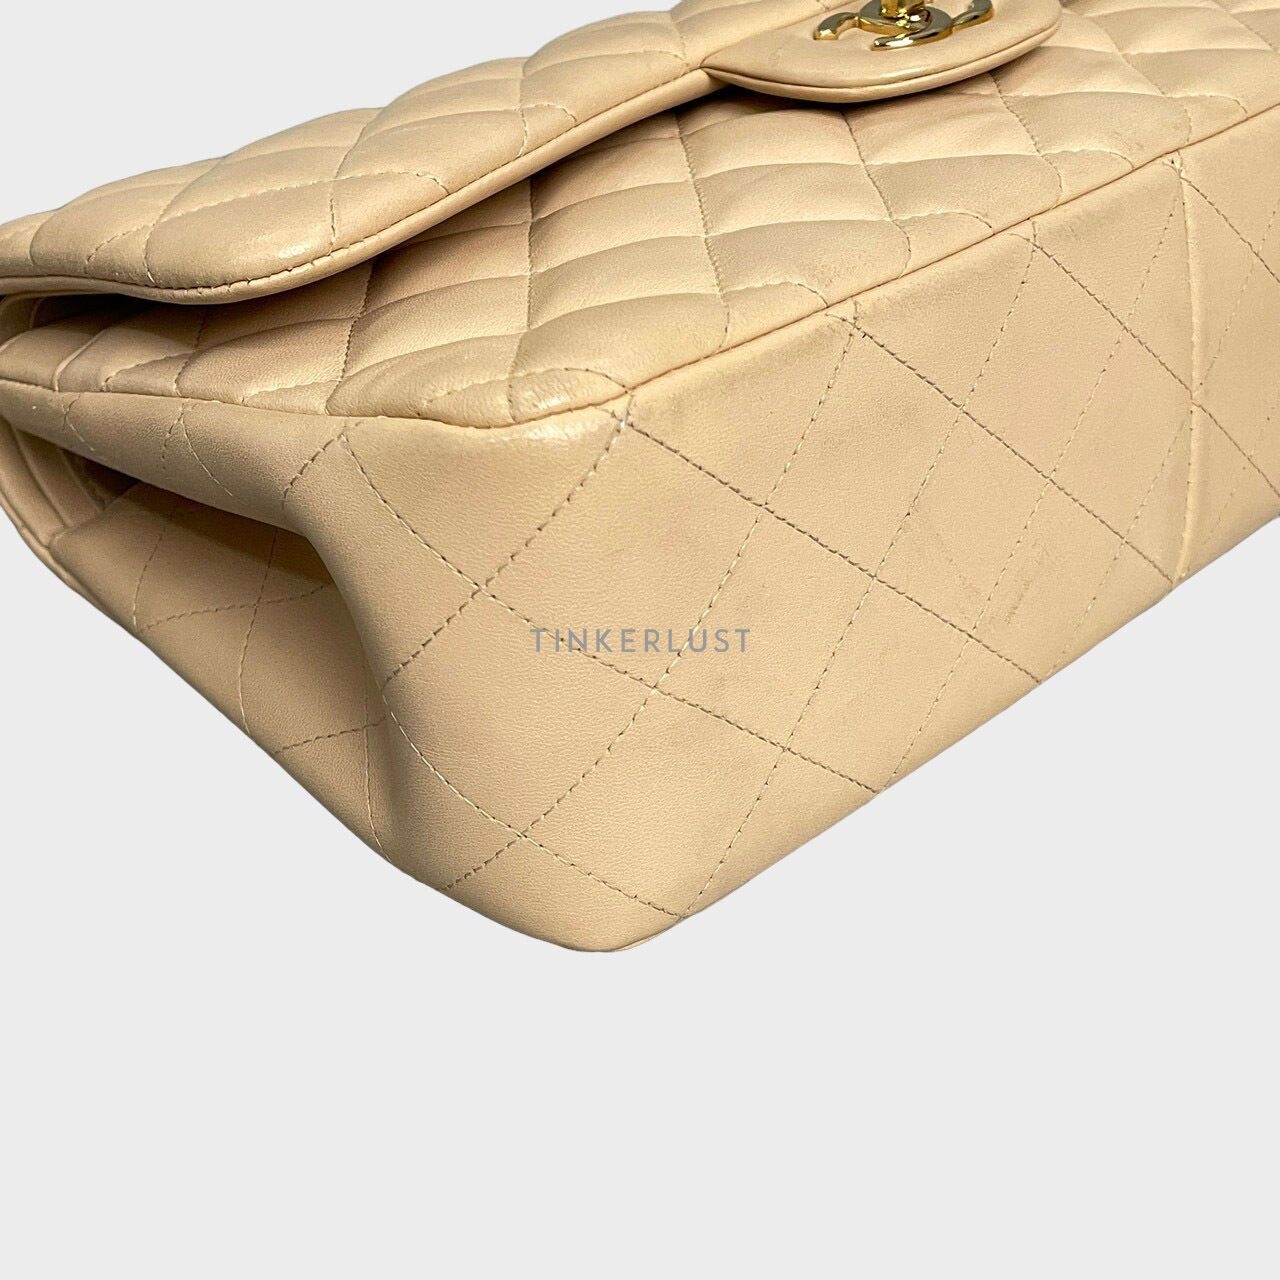 Chanel Classic Jumbo Double Flap Beige Shoulder Bag